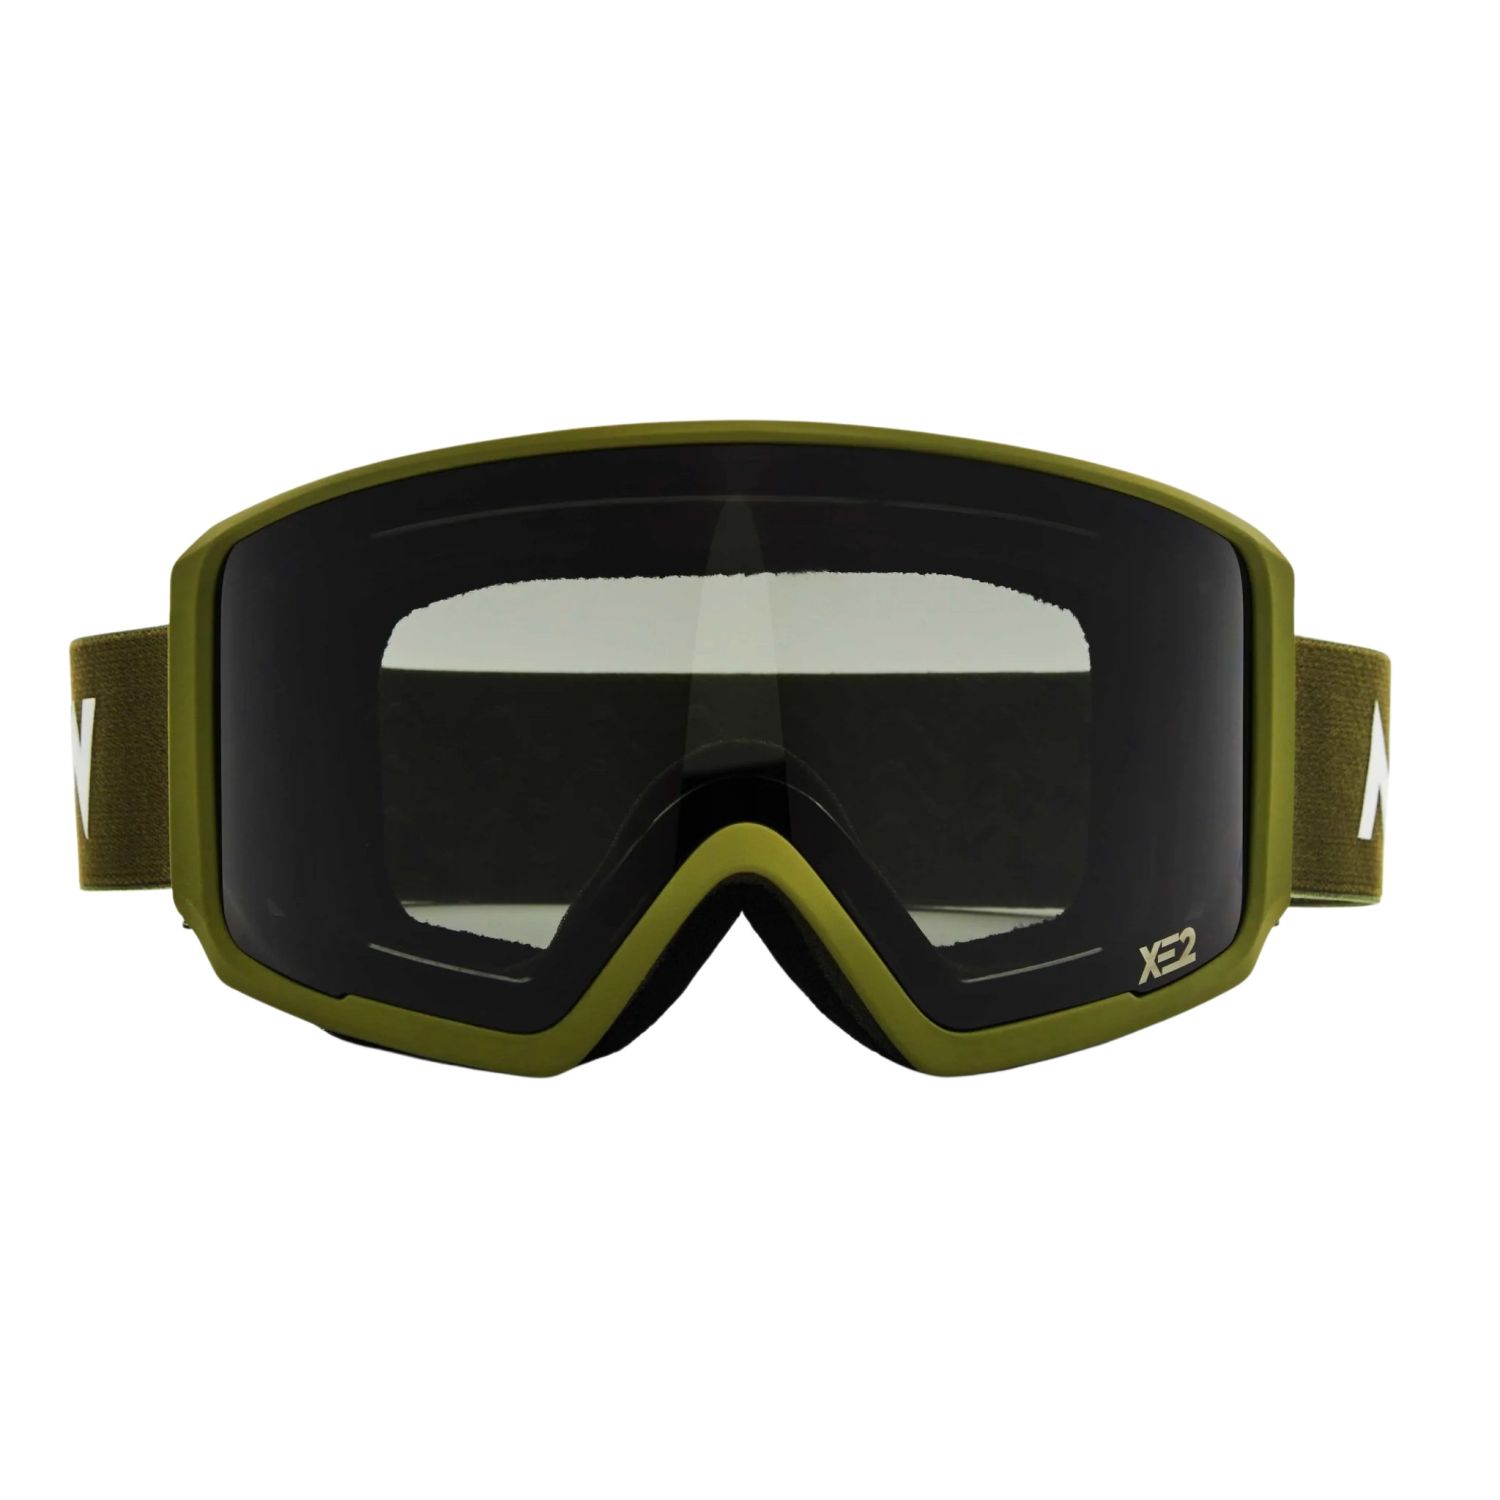 MessyWeekend Flip XE2, skibriller, grøn